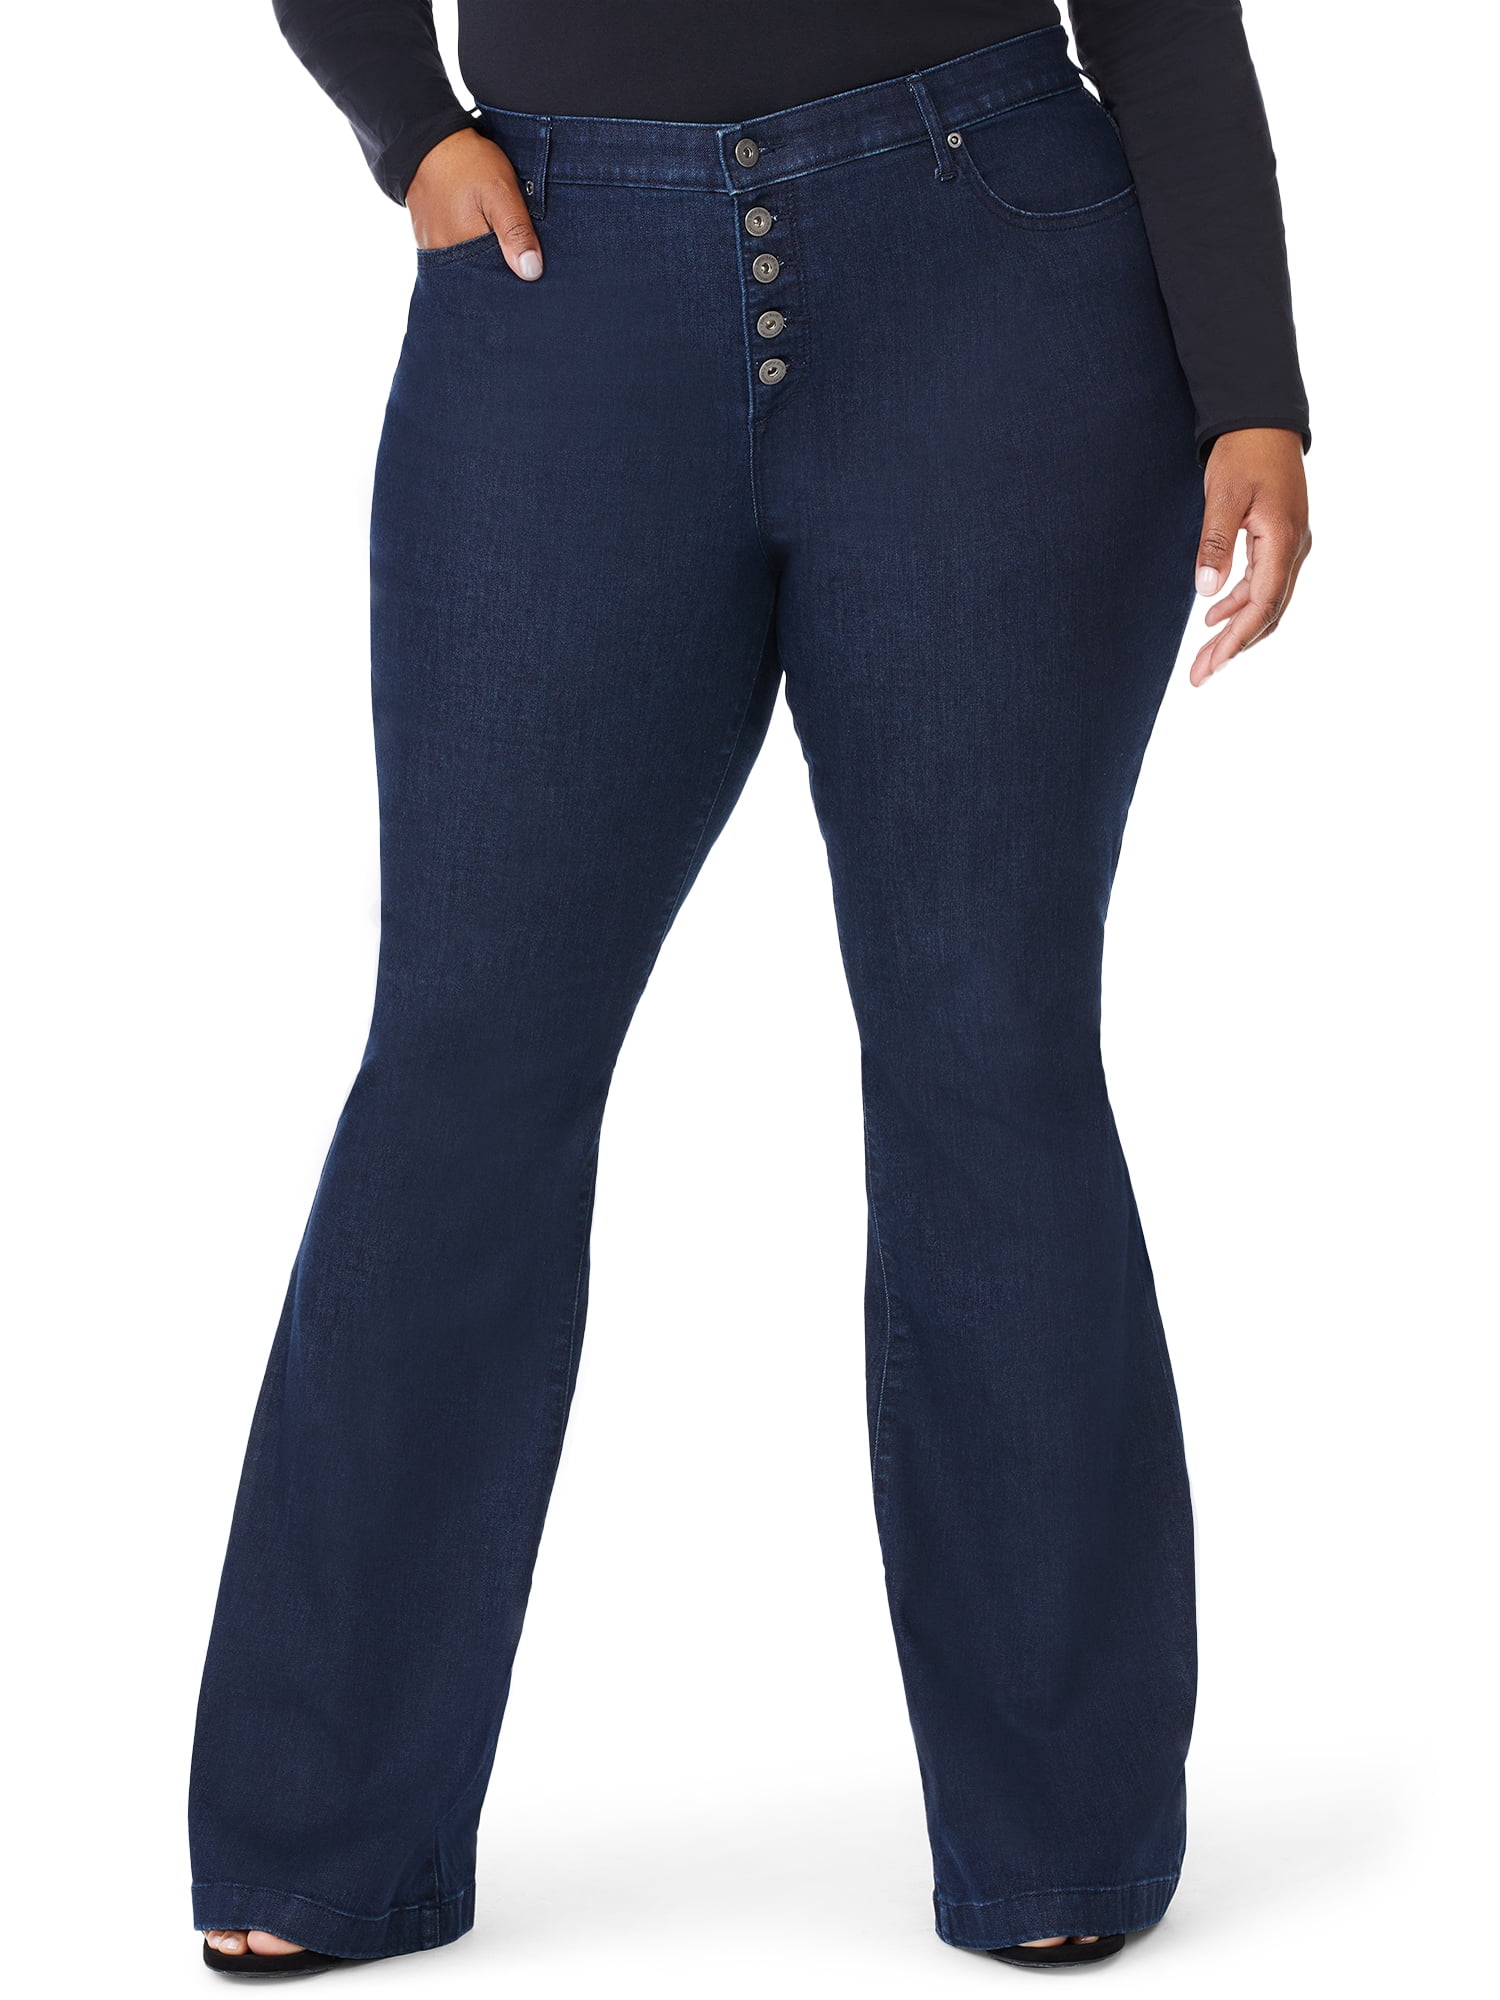 Sofia Jeans Women's Plus Size Melisa Curvy High-Rise Flare Jeans ...